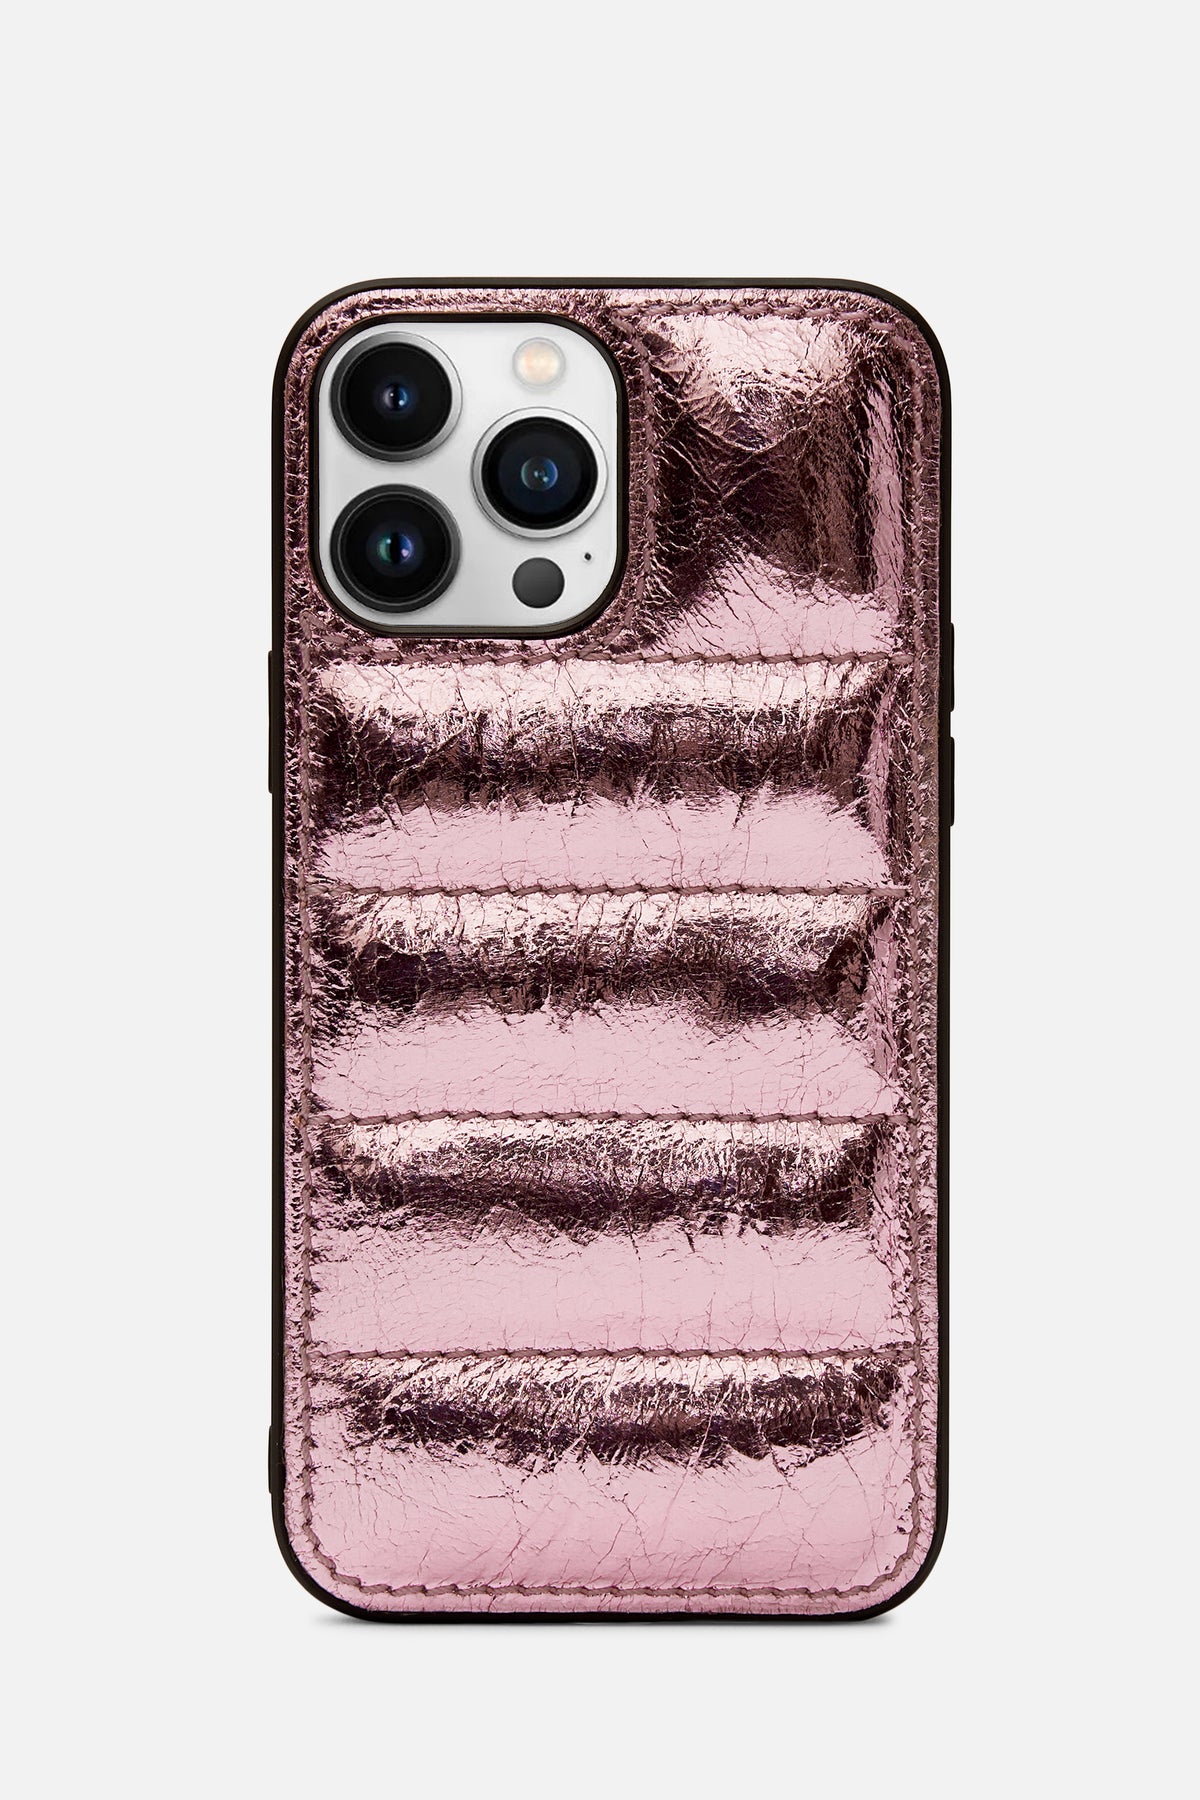 Iphone Puffer Case - Quilted - Rosé Metallic